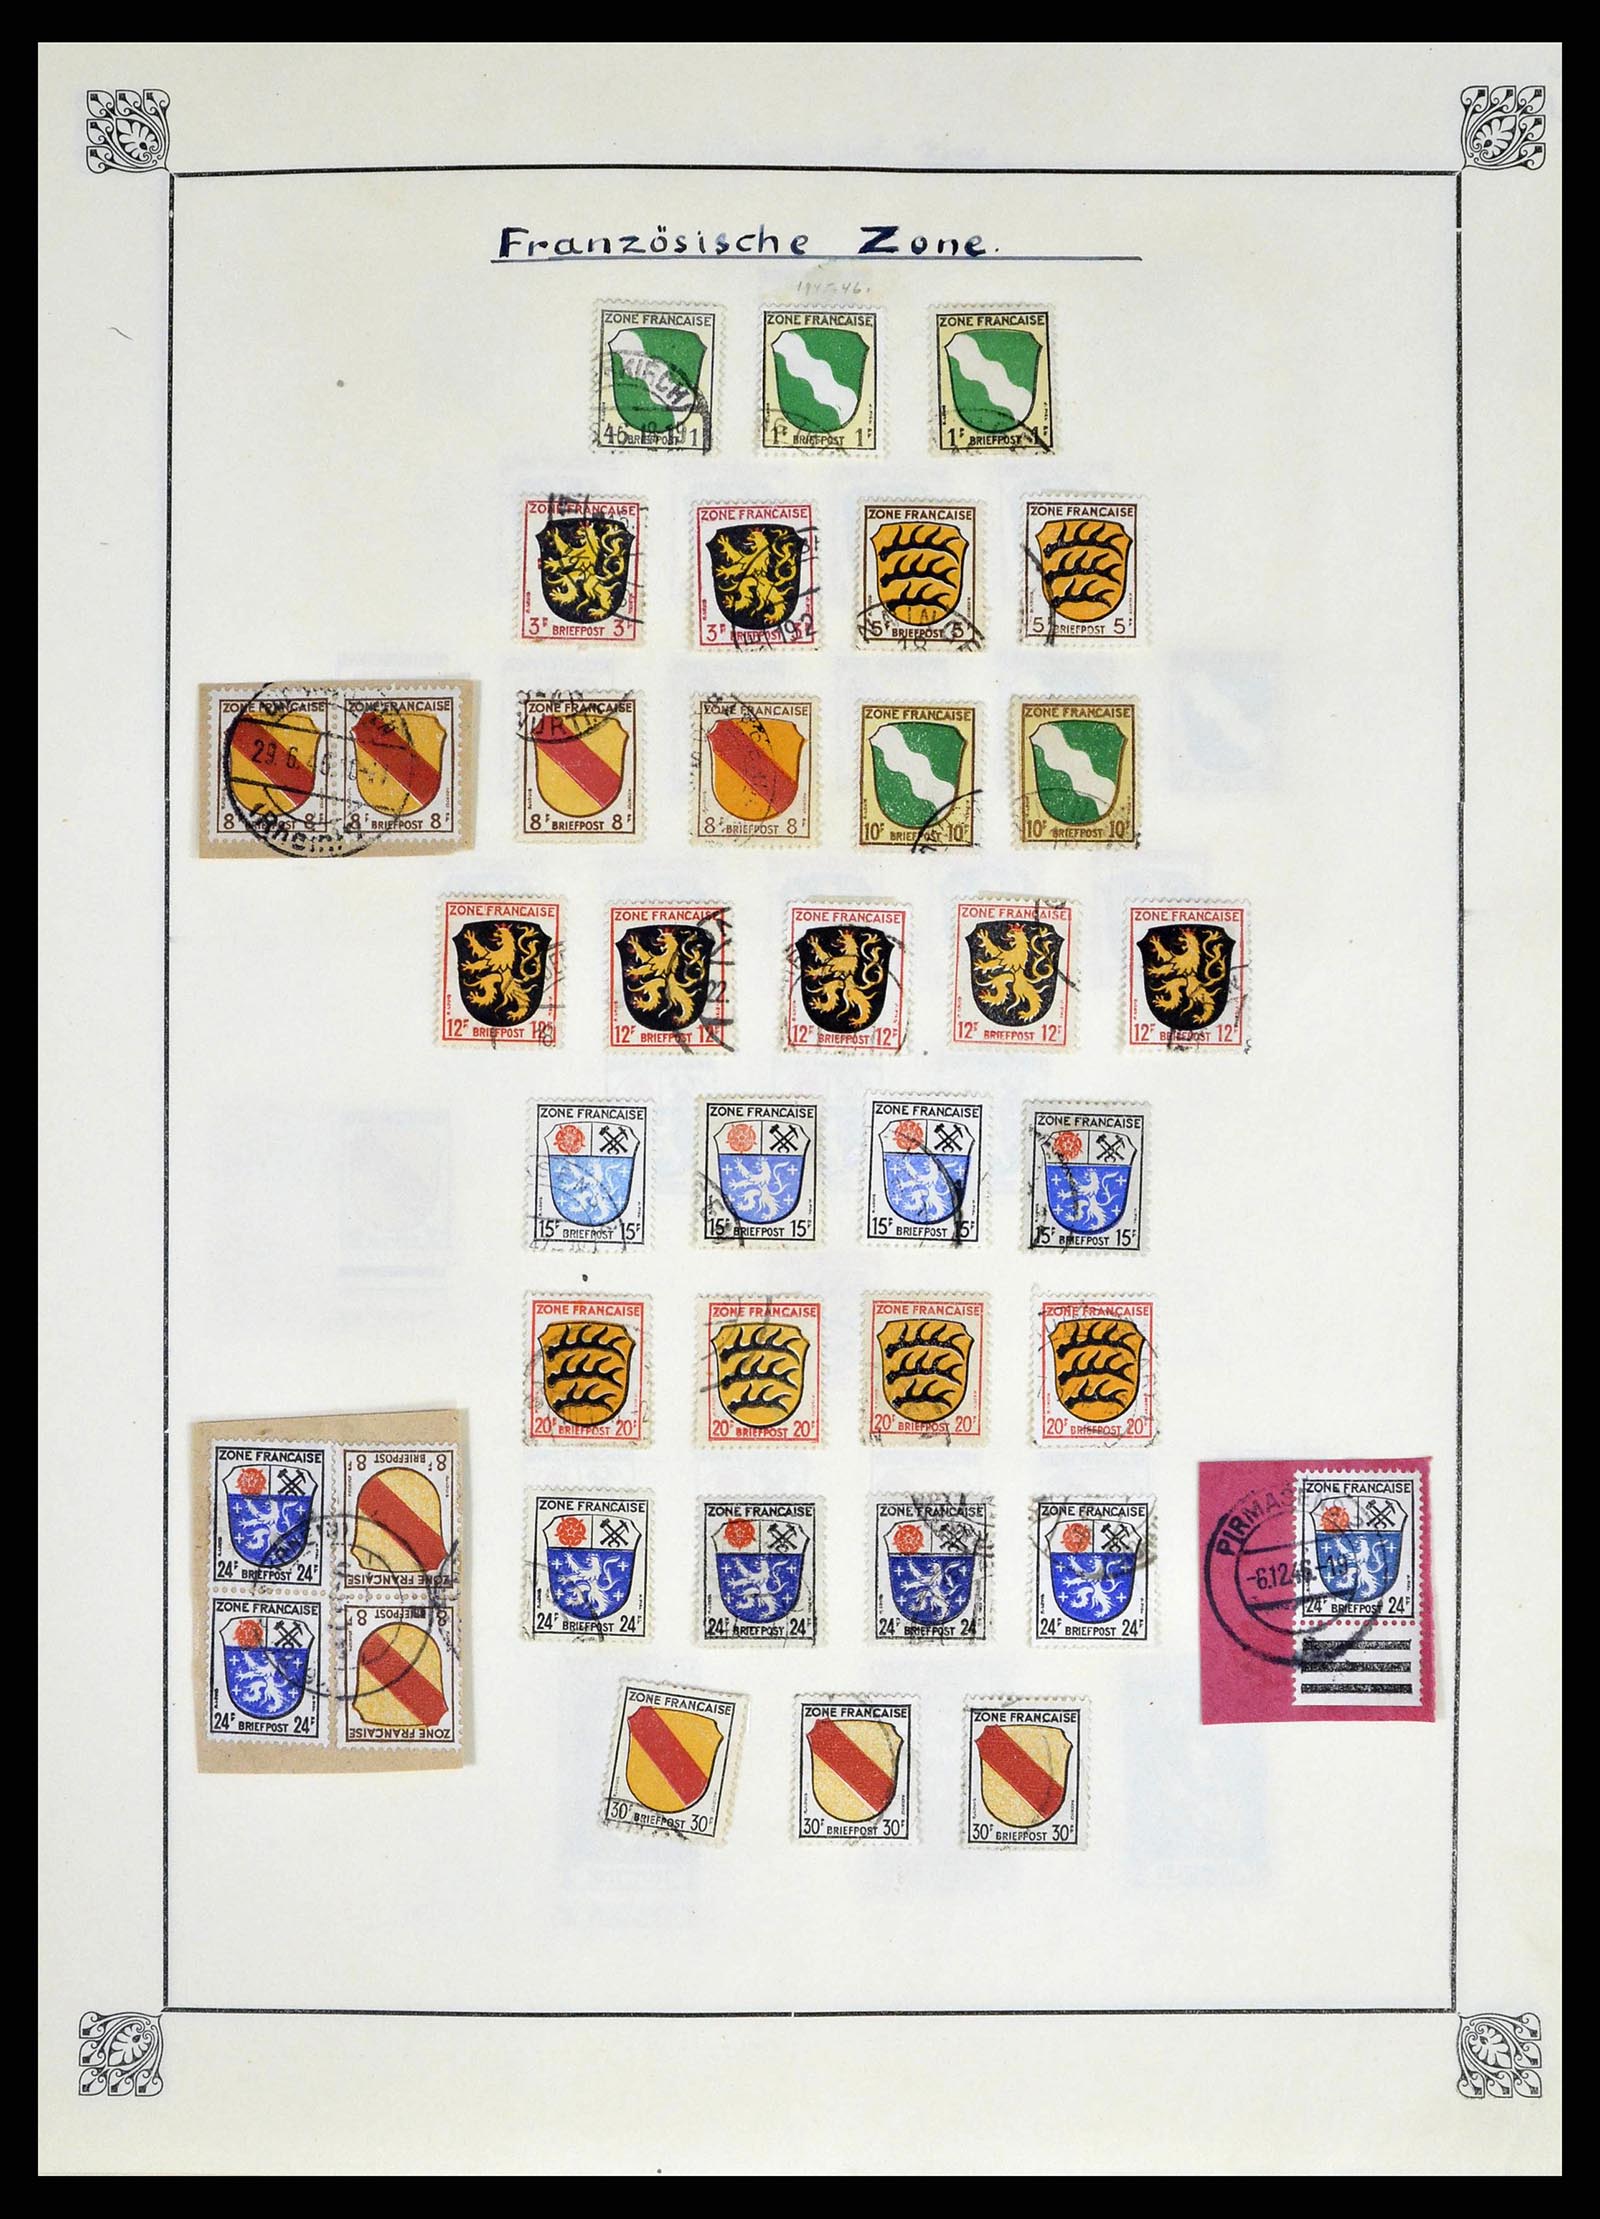 38713 0016 - Stamp collection 38713 German Zones 1945-1949.